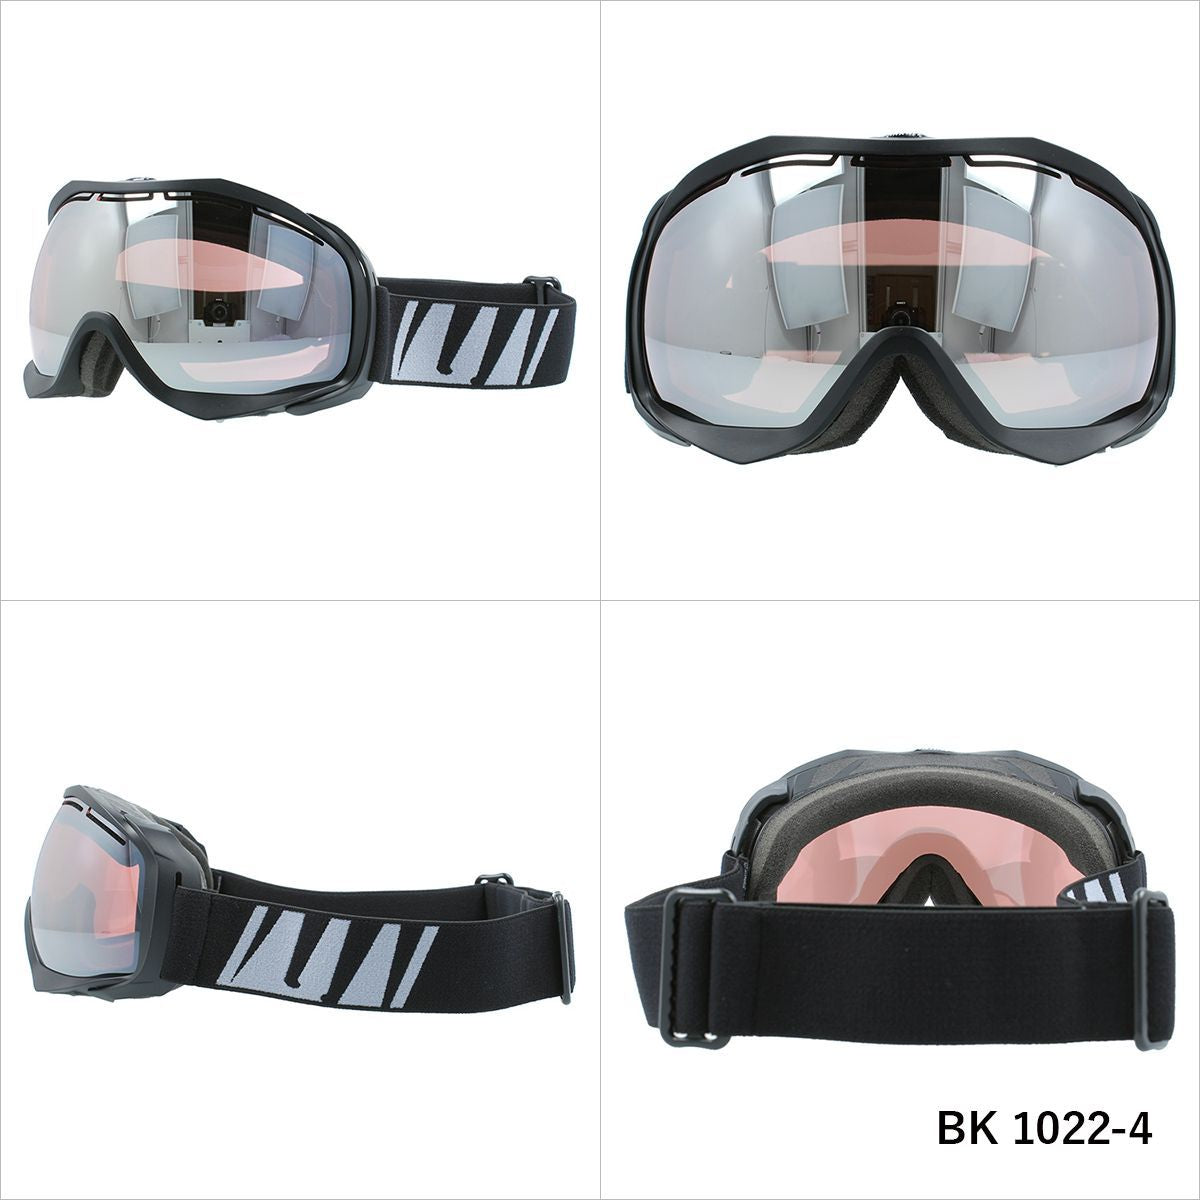 BAKKNEL バクネル BK 1022 眼鏡対応 ヘルメット対応 ミラーレンズ スノーゴーグル スキー スノーボード スノボ 球面ダブルレンズ フレームあり メンズ レディース ウィンタースポーツ 曇り防止 曇り止め 誕生日 プレゼント 男性 女性